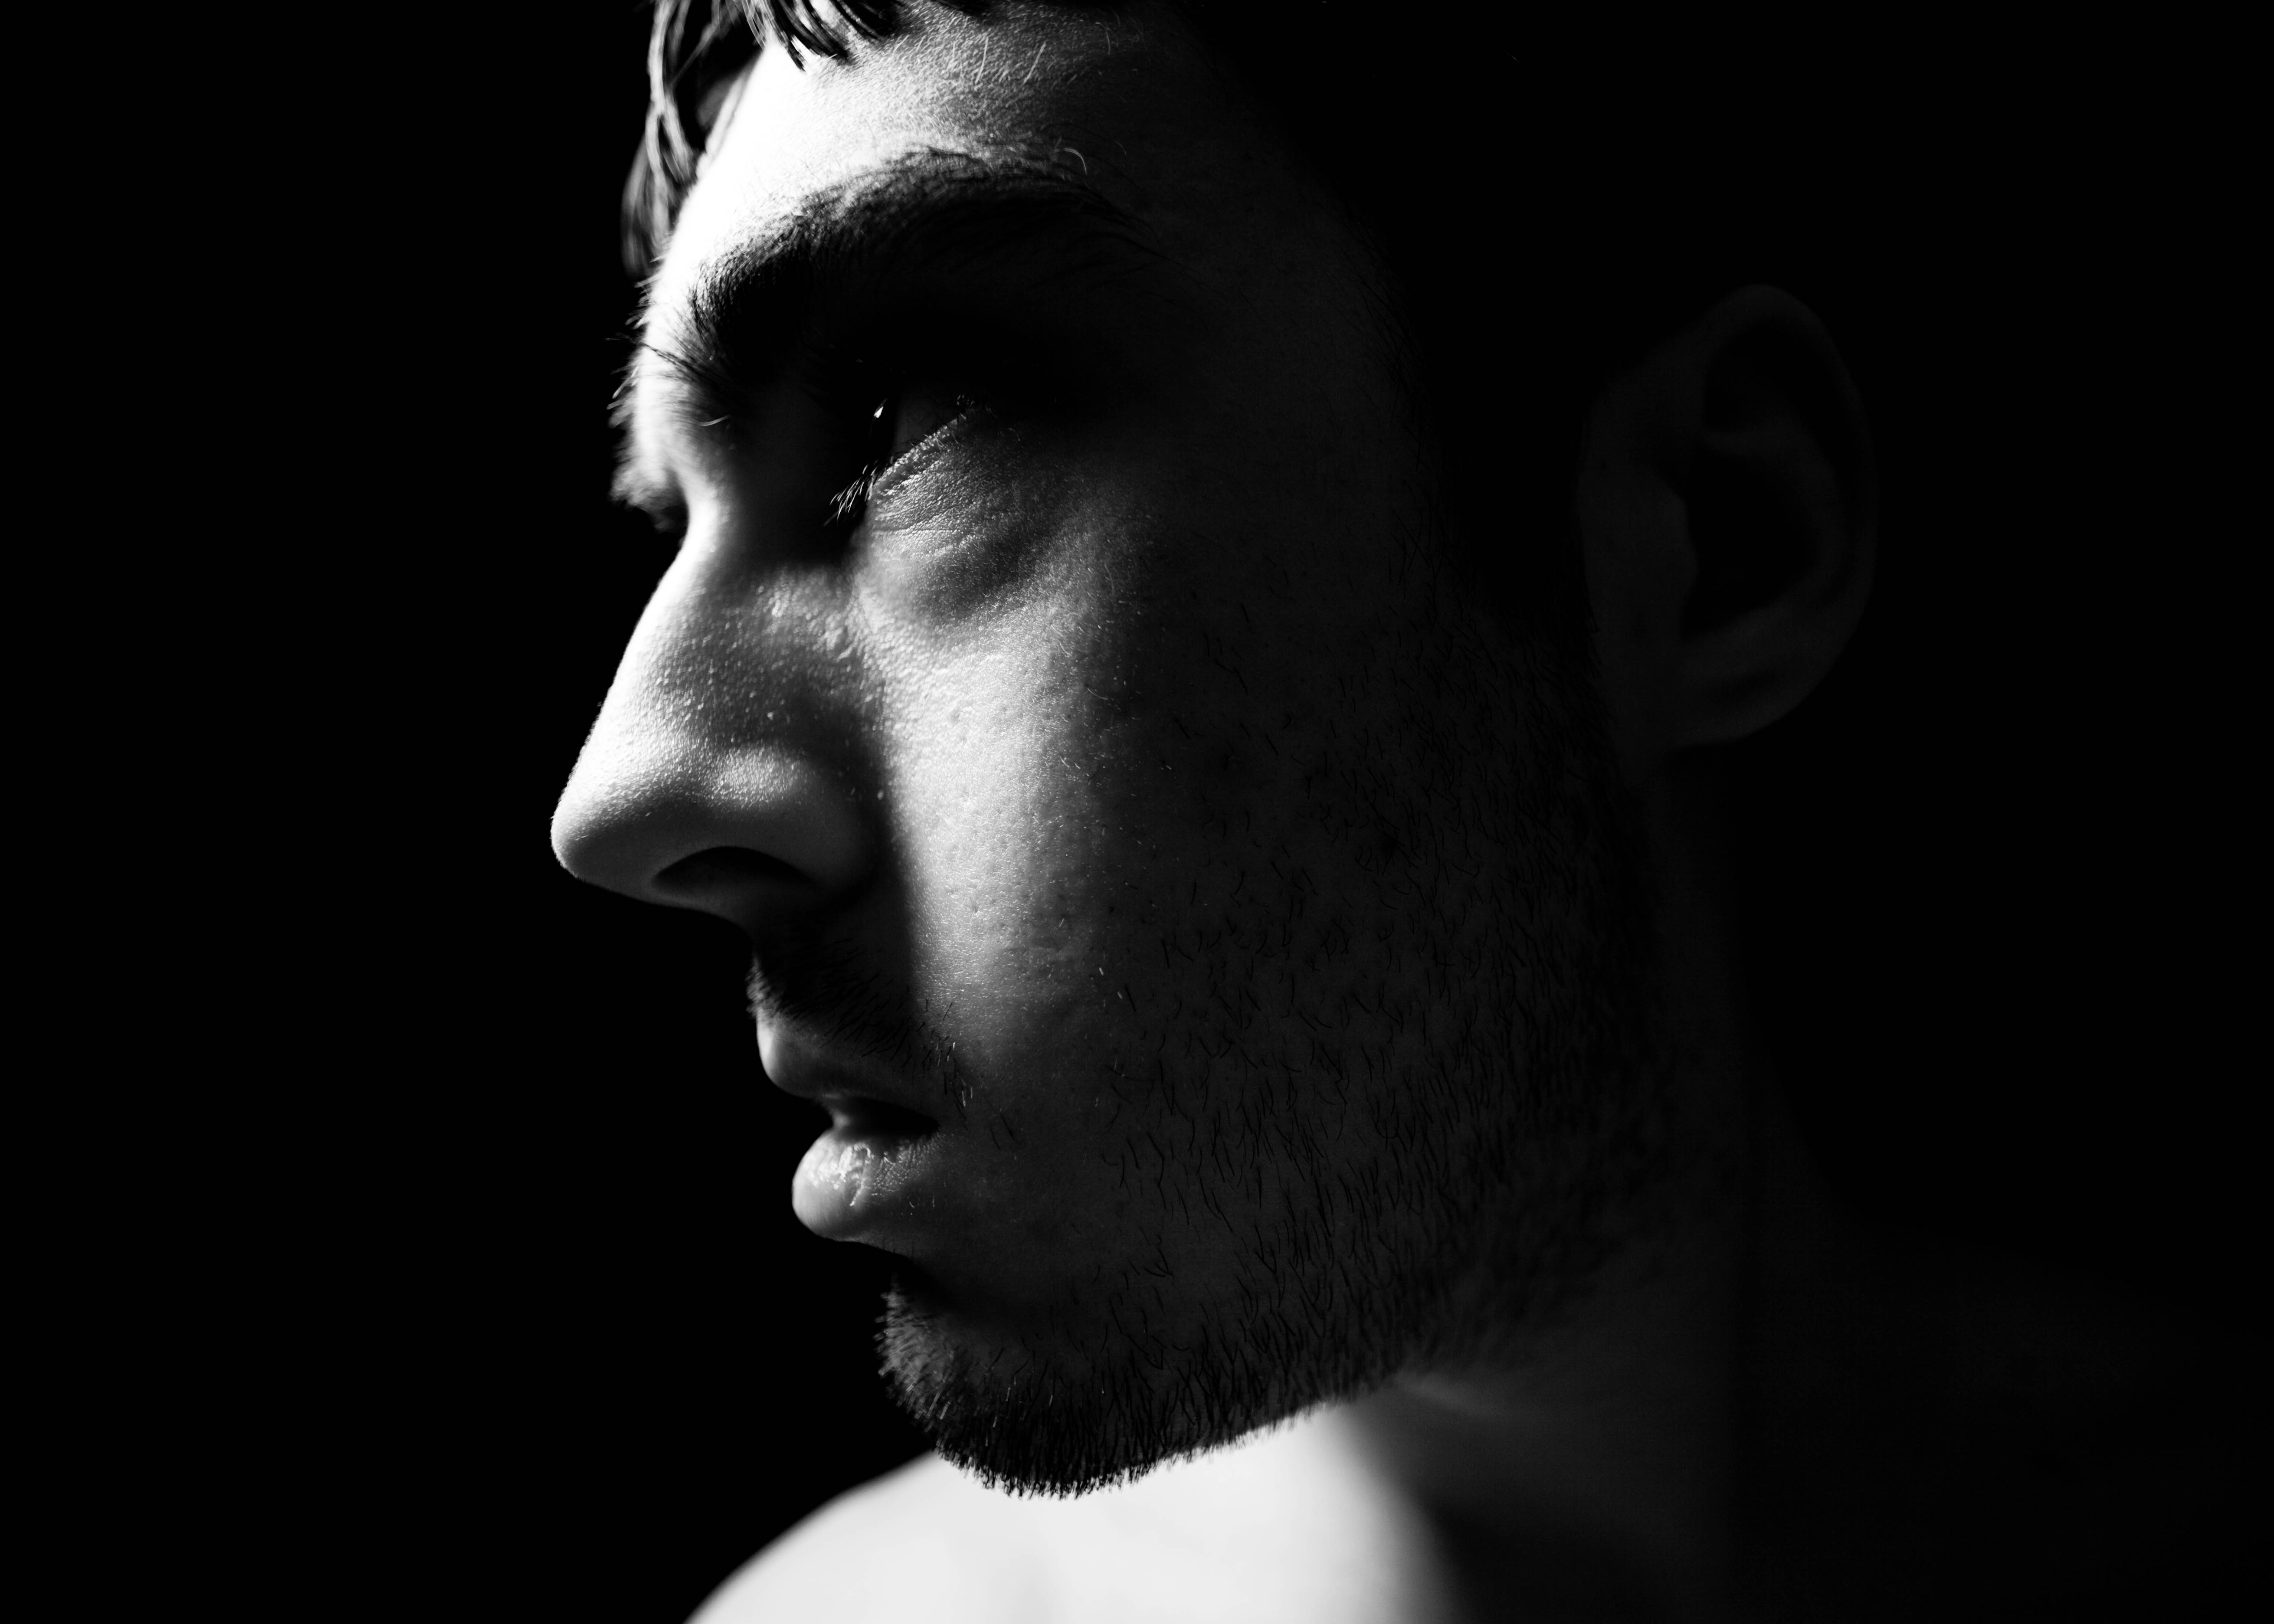 Dark Self-Portrait, 2013